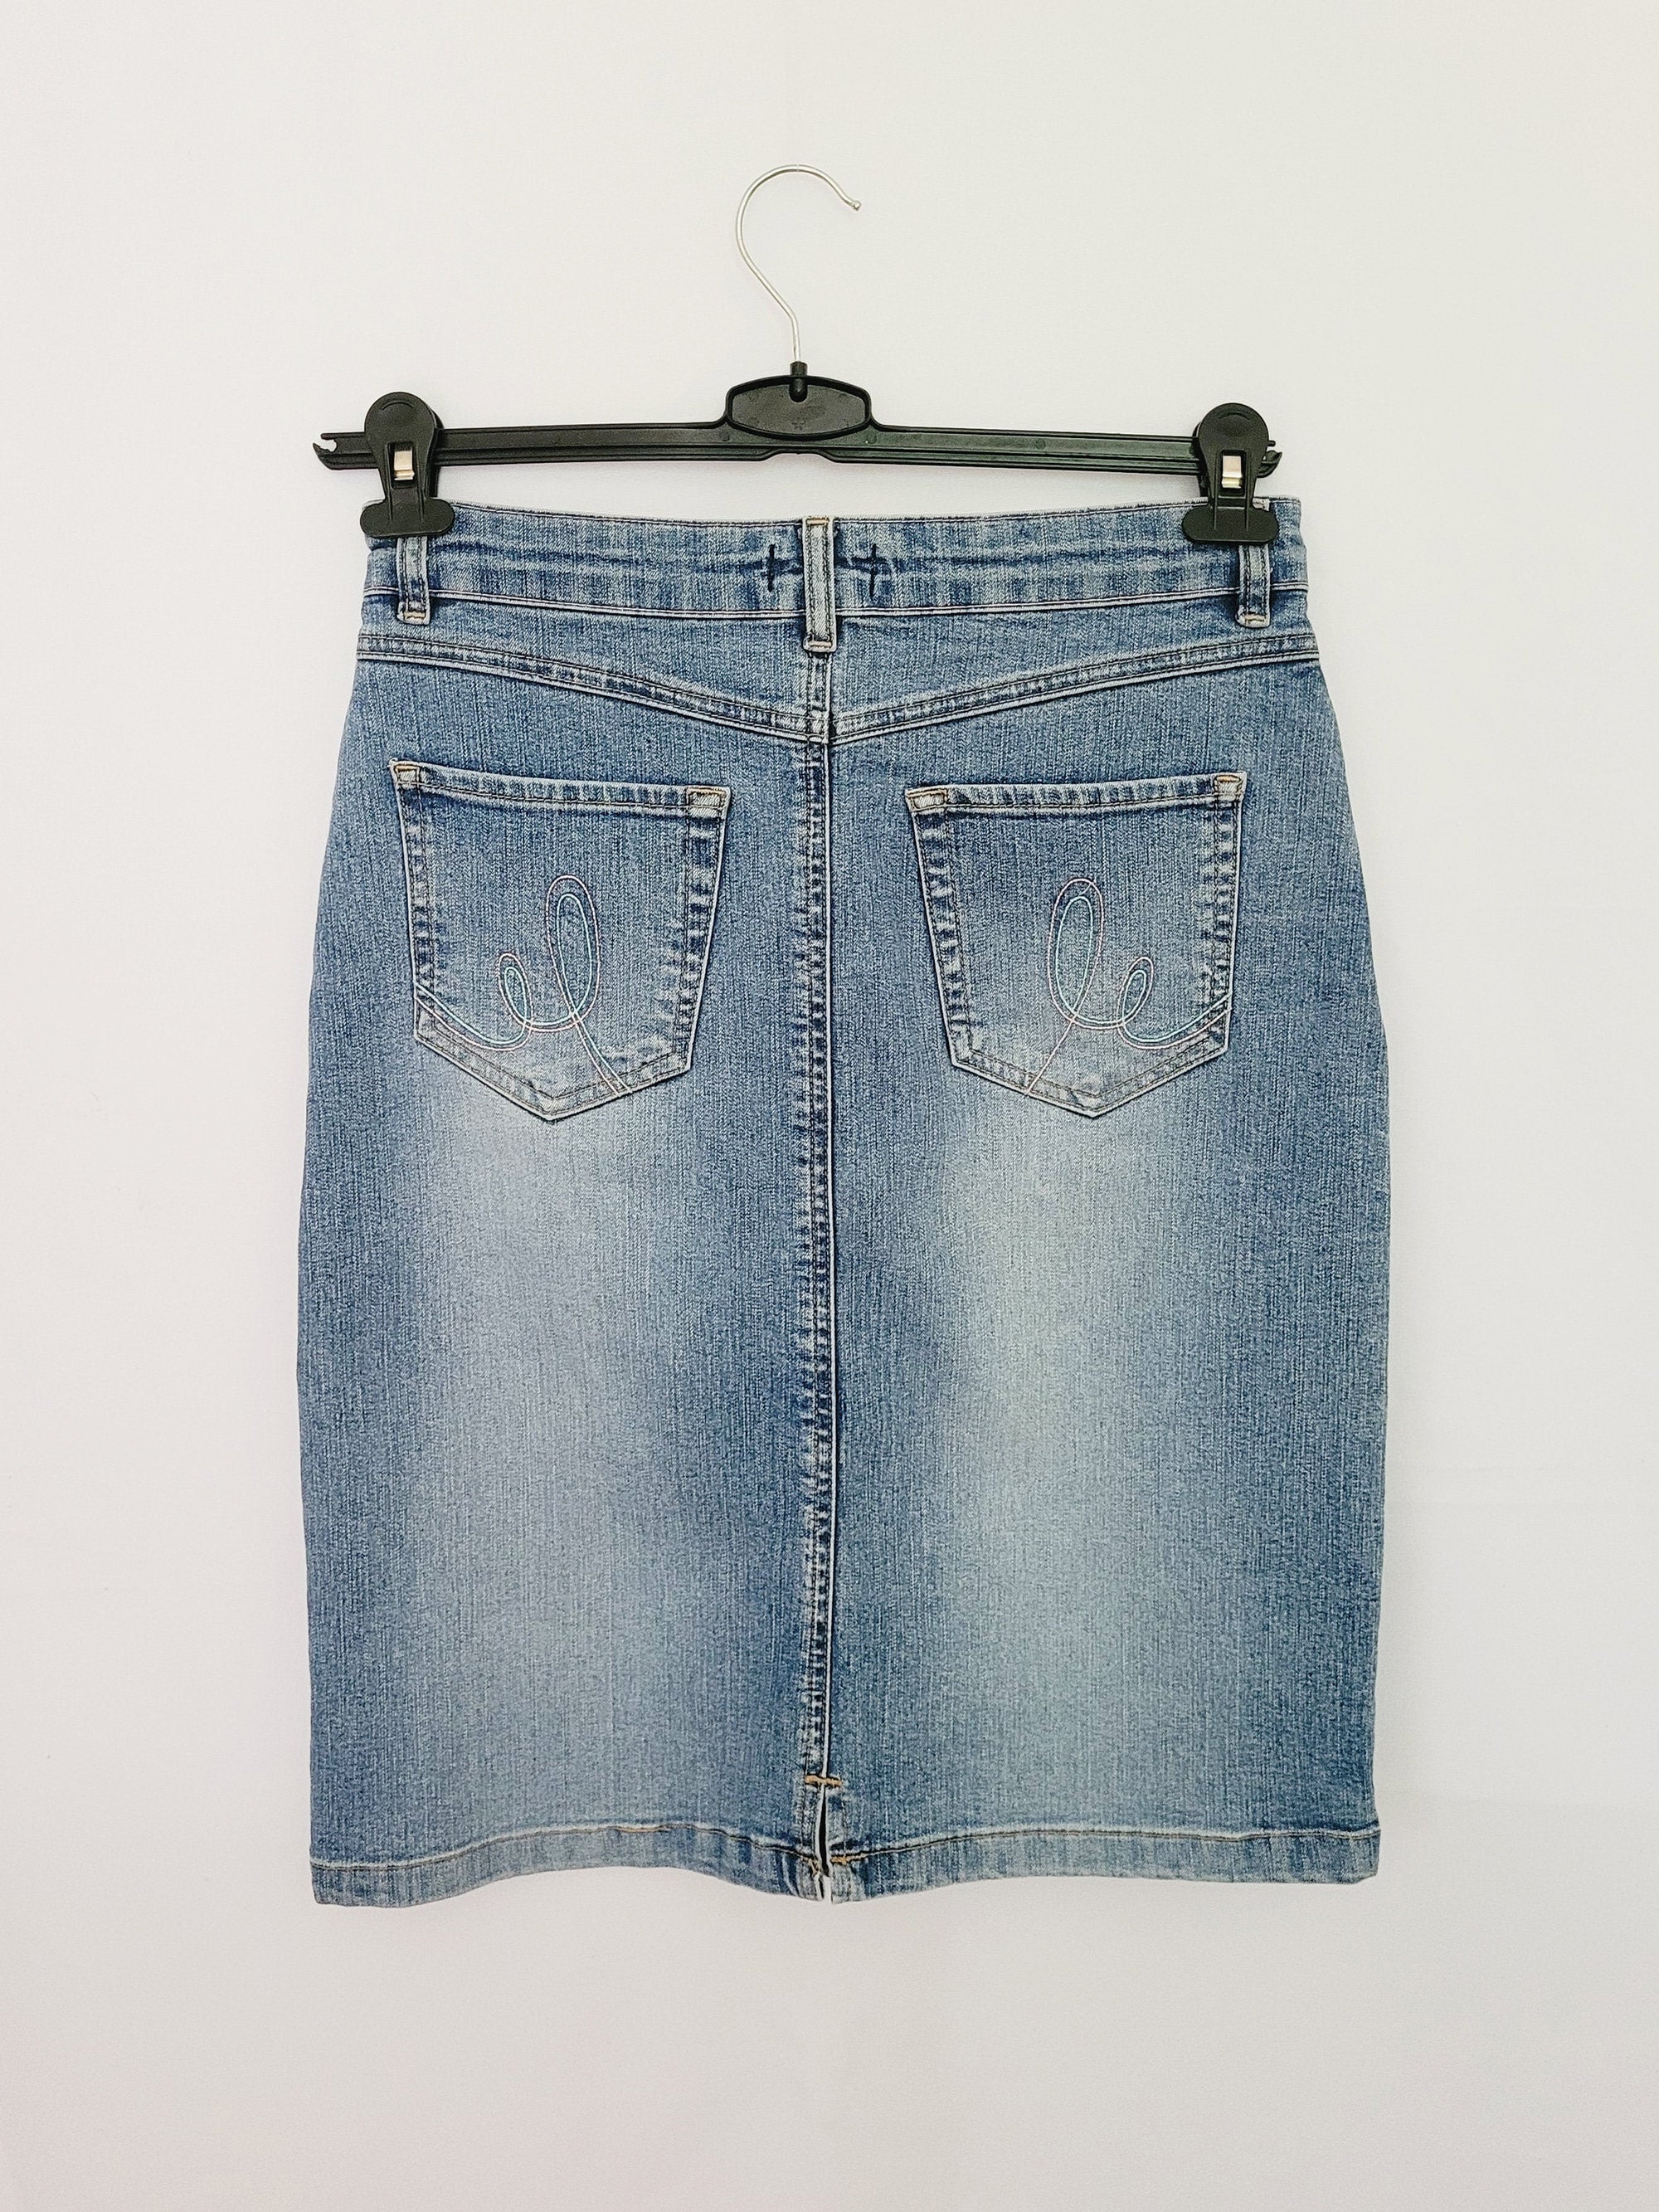 Retro 90s blue denim jeans Western midi pencil skirt